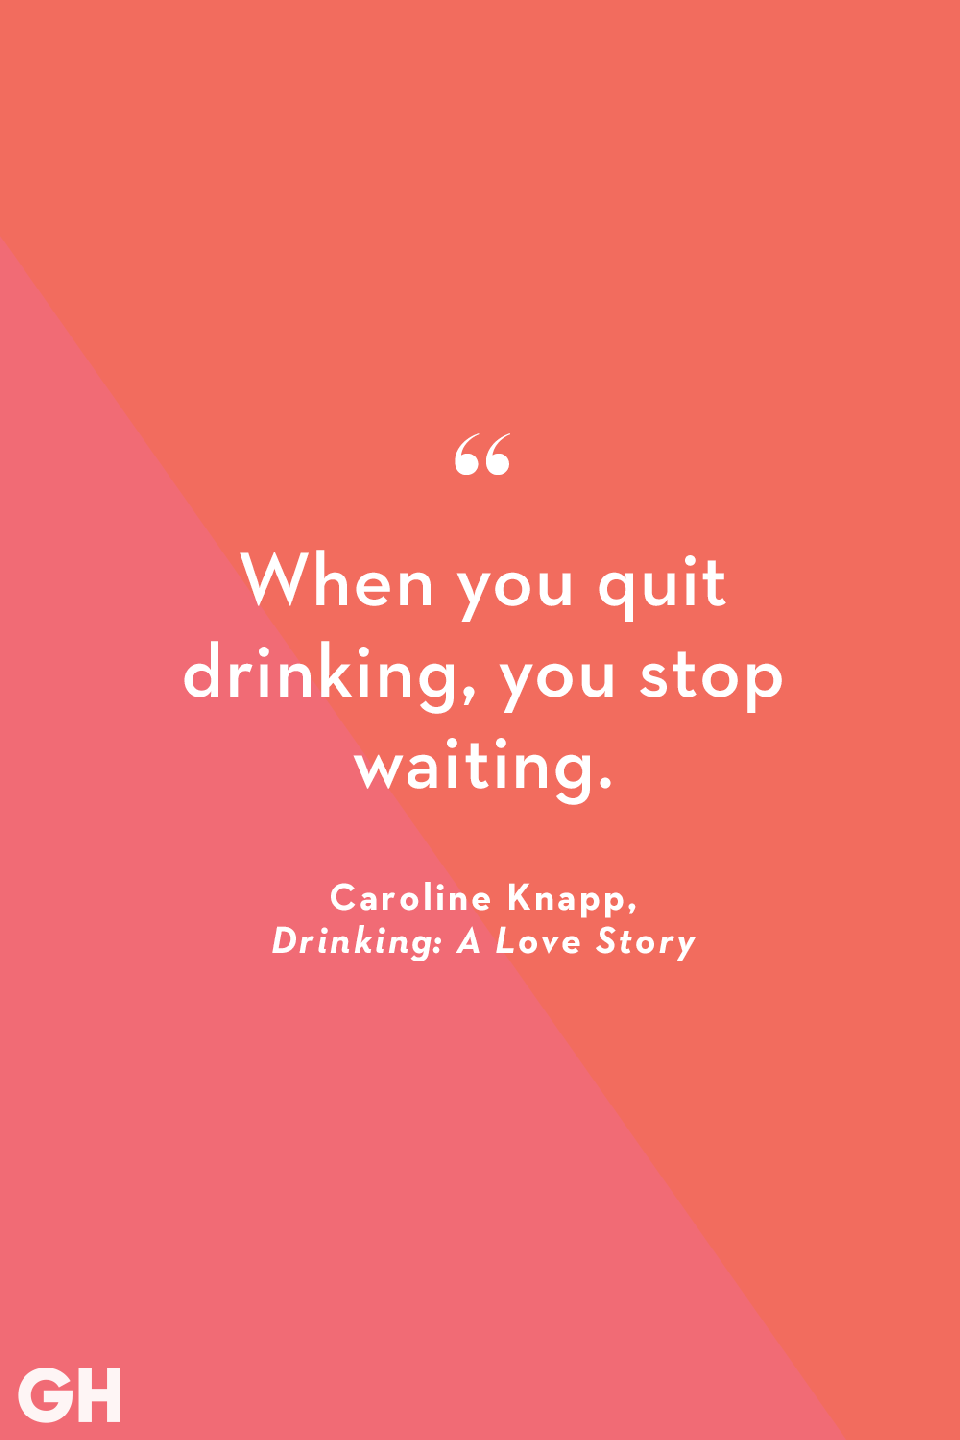 Caroline Knapp, "Drinking: A Love Story"